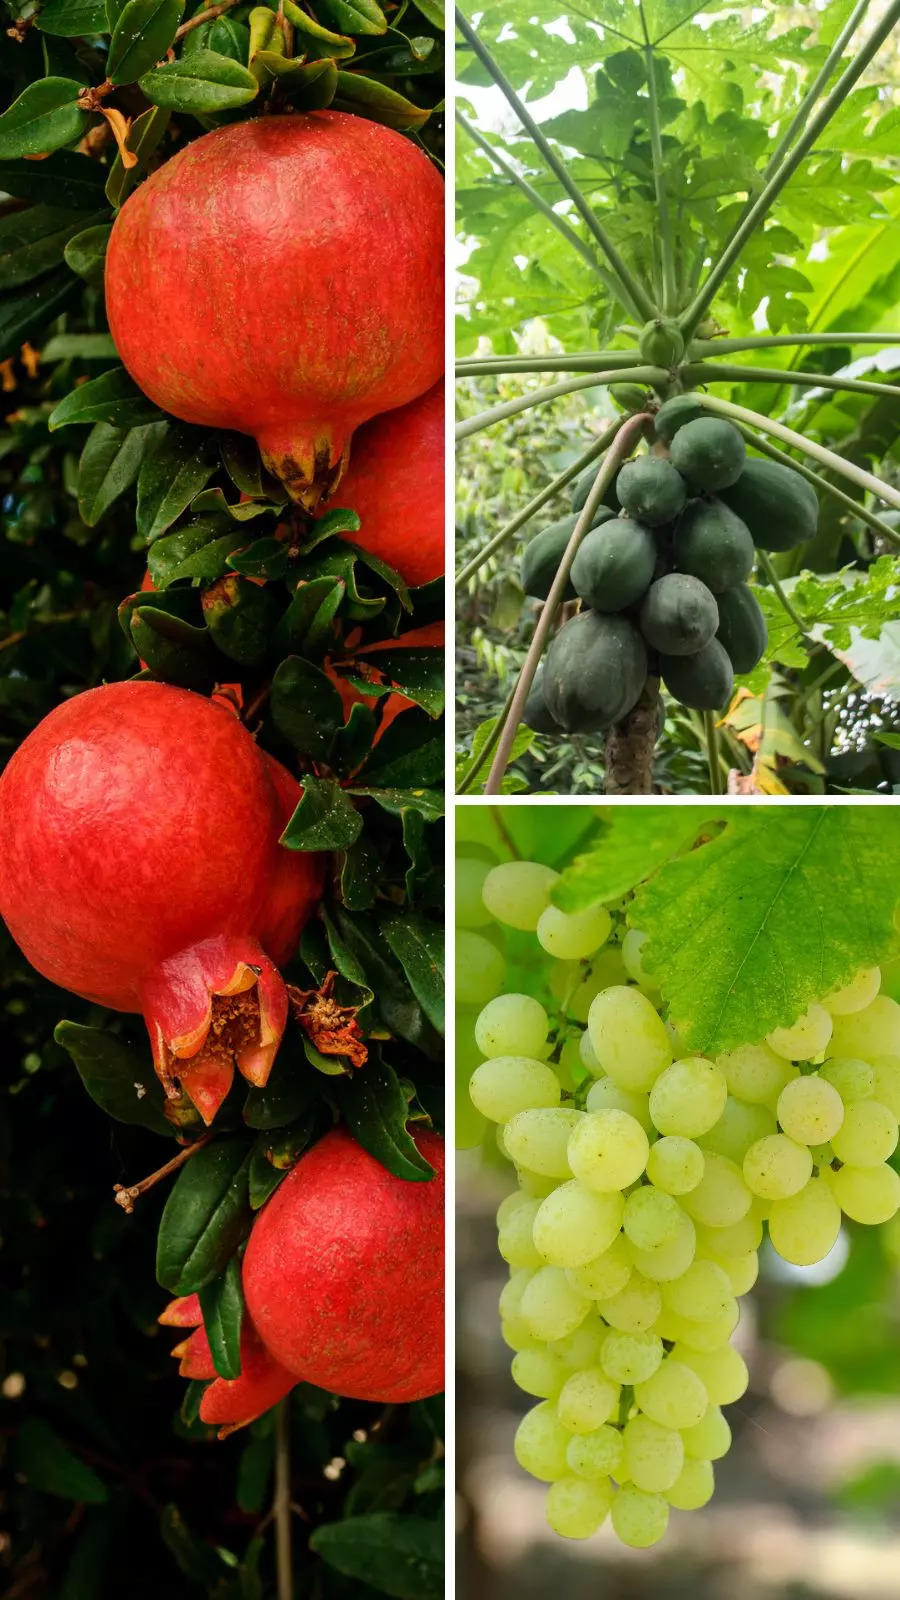 10 fruits to increase hemoglobin levels naturally